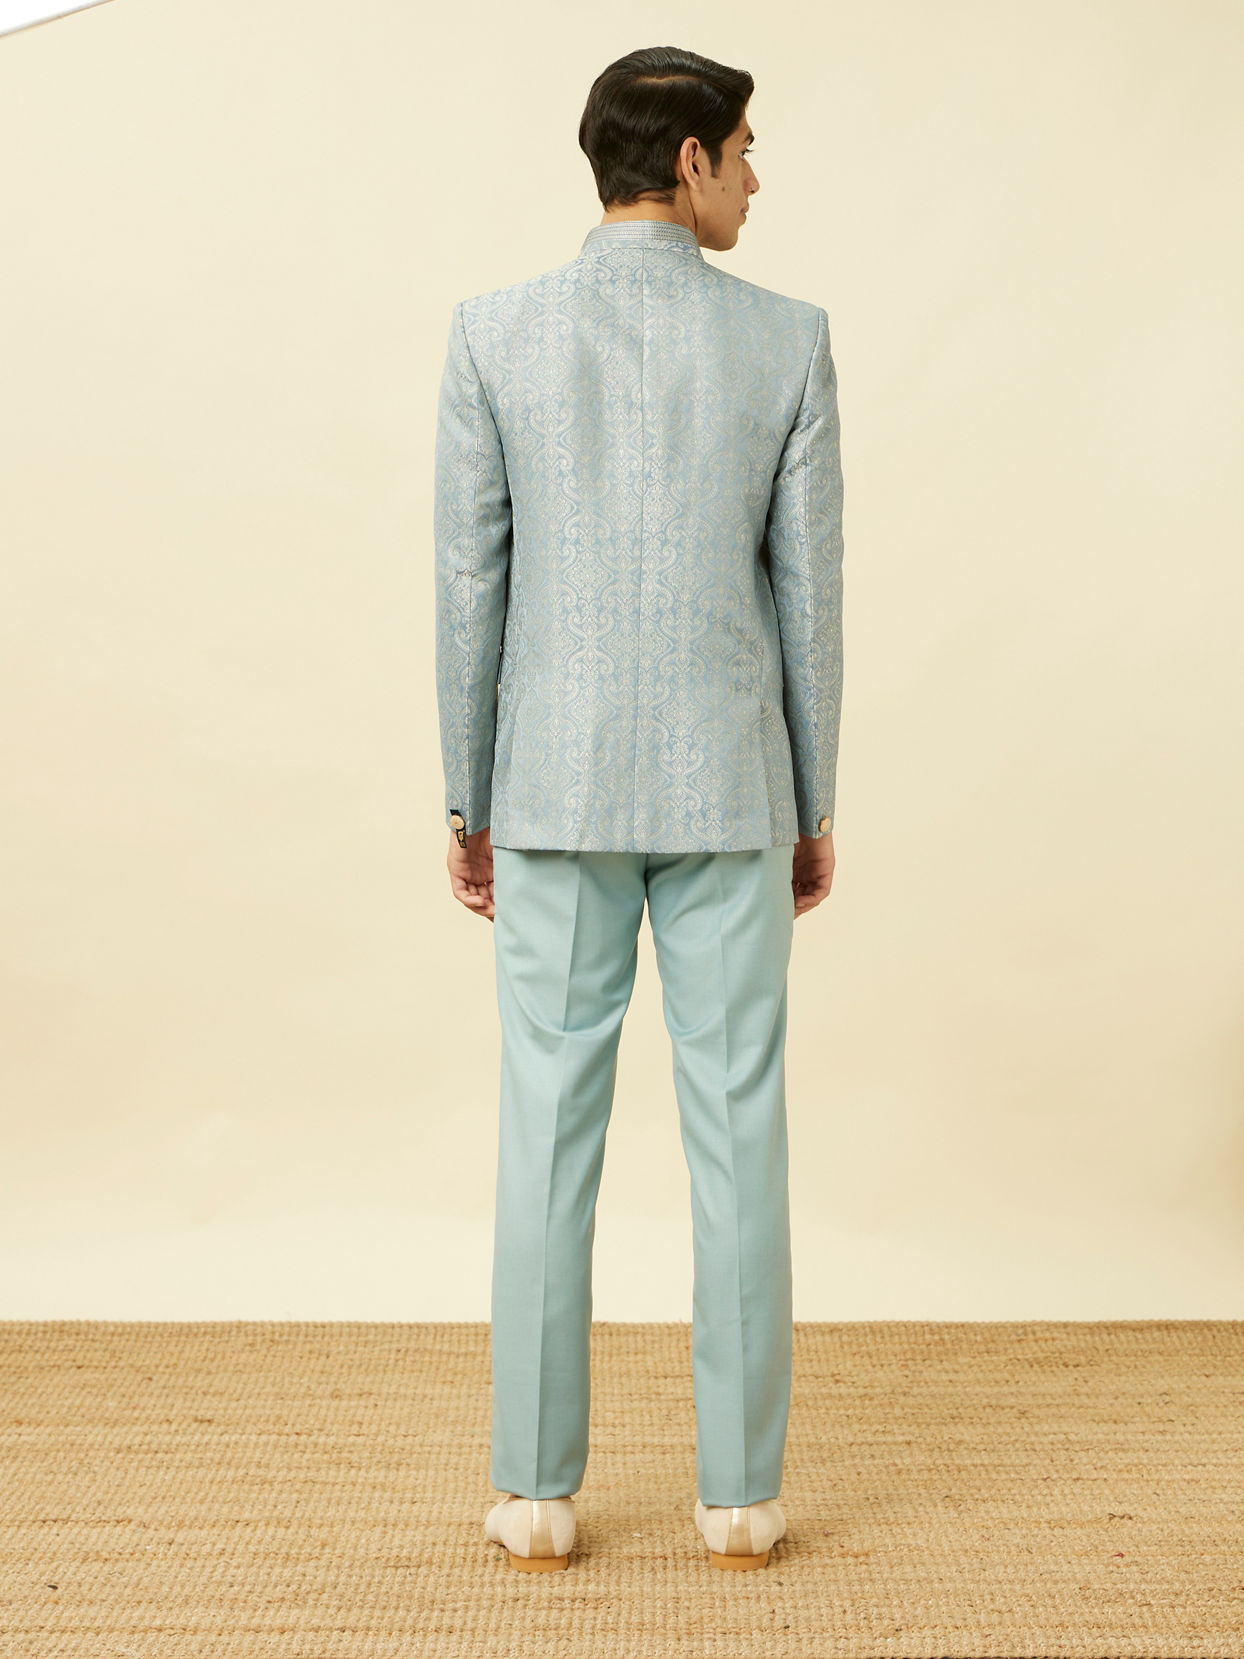 Buy Blissful Blue Medallion Patterned Suit Online in India @Manyavar ...